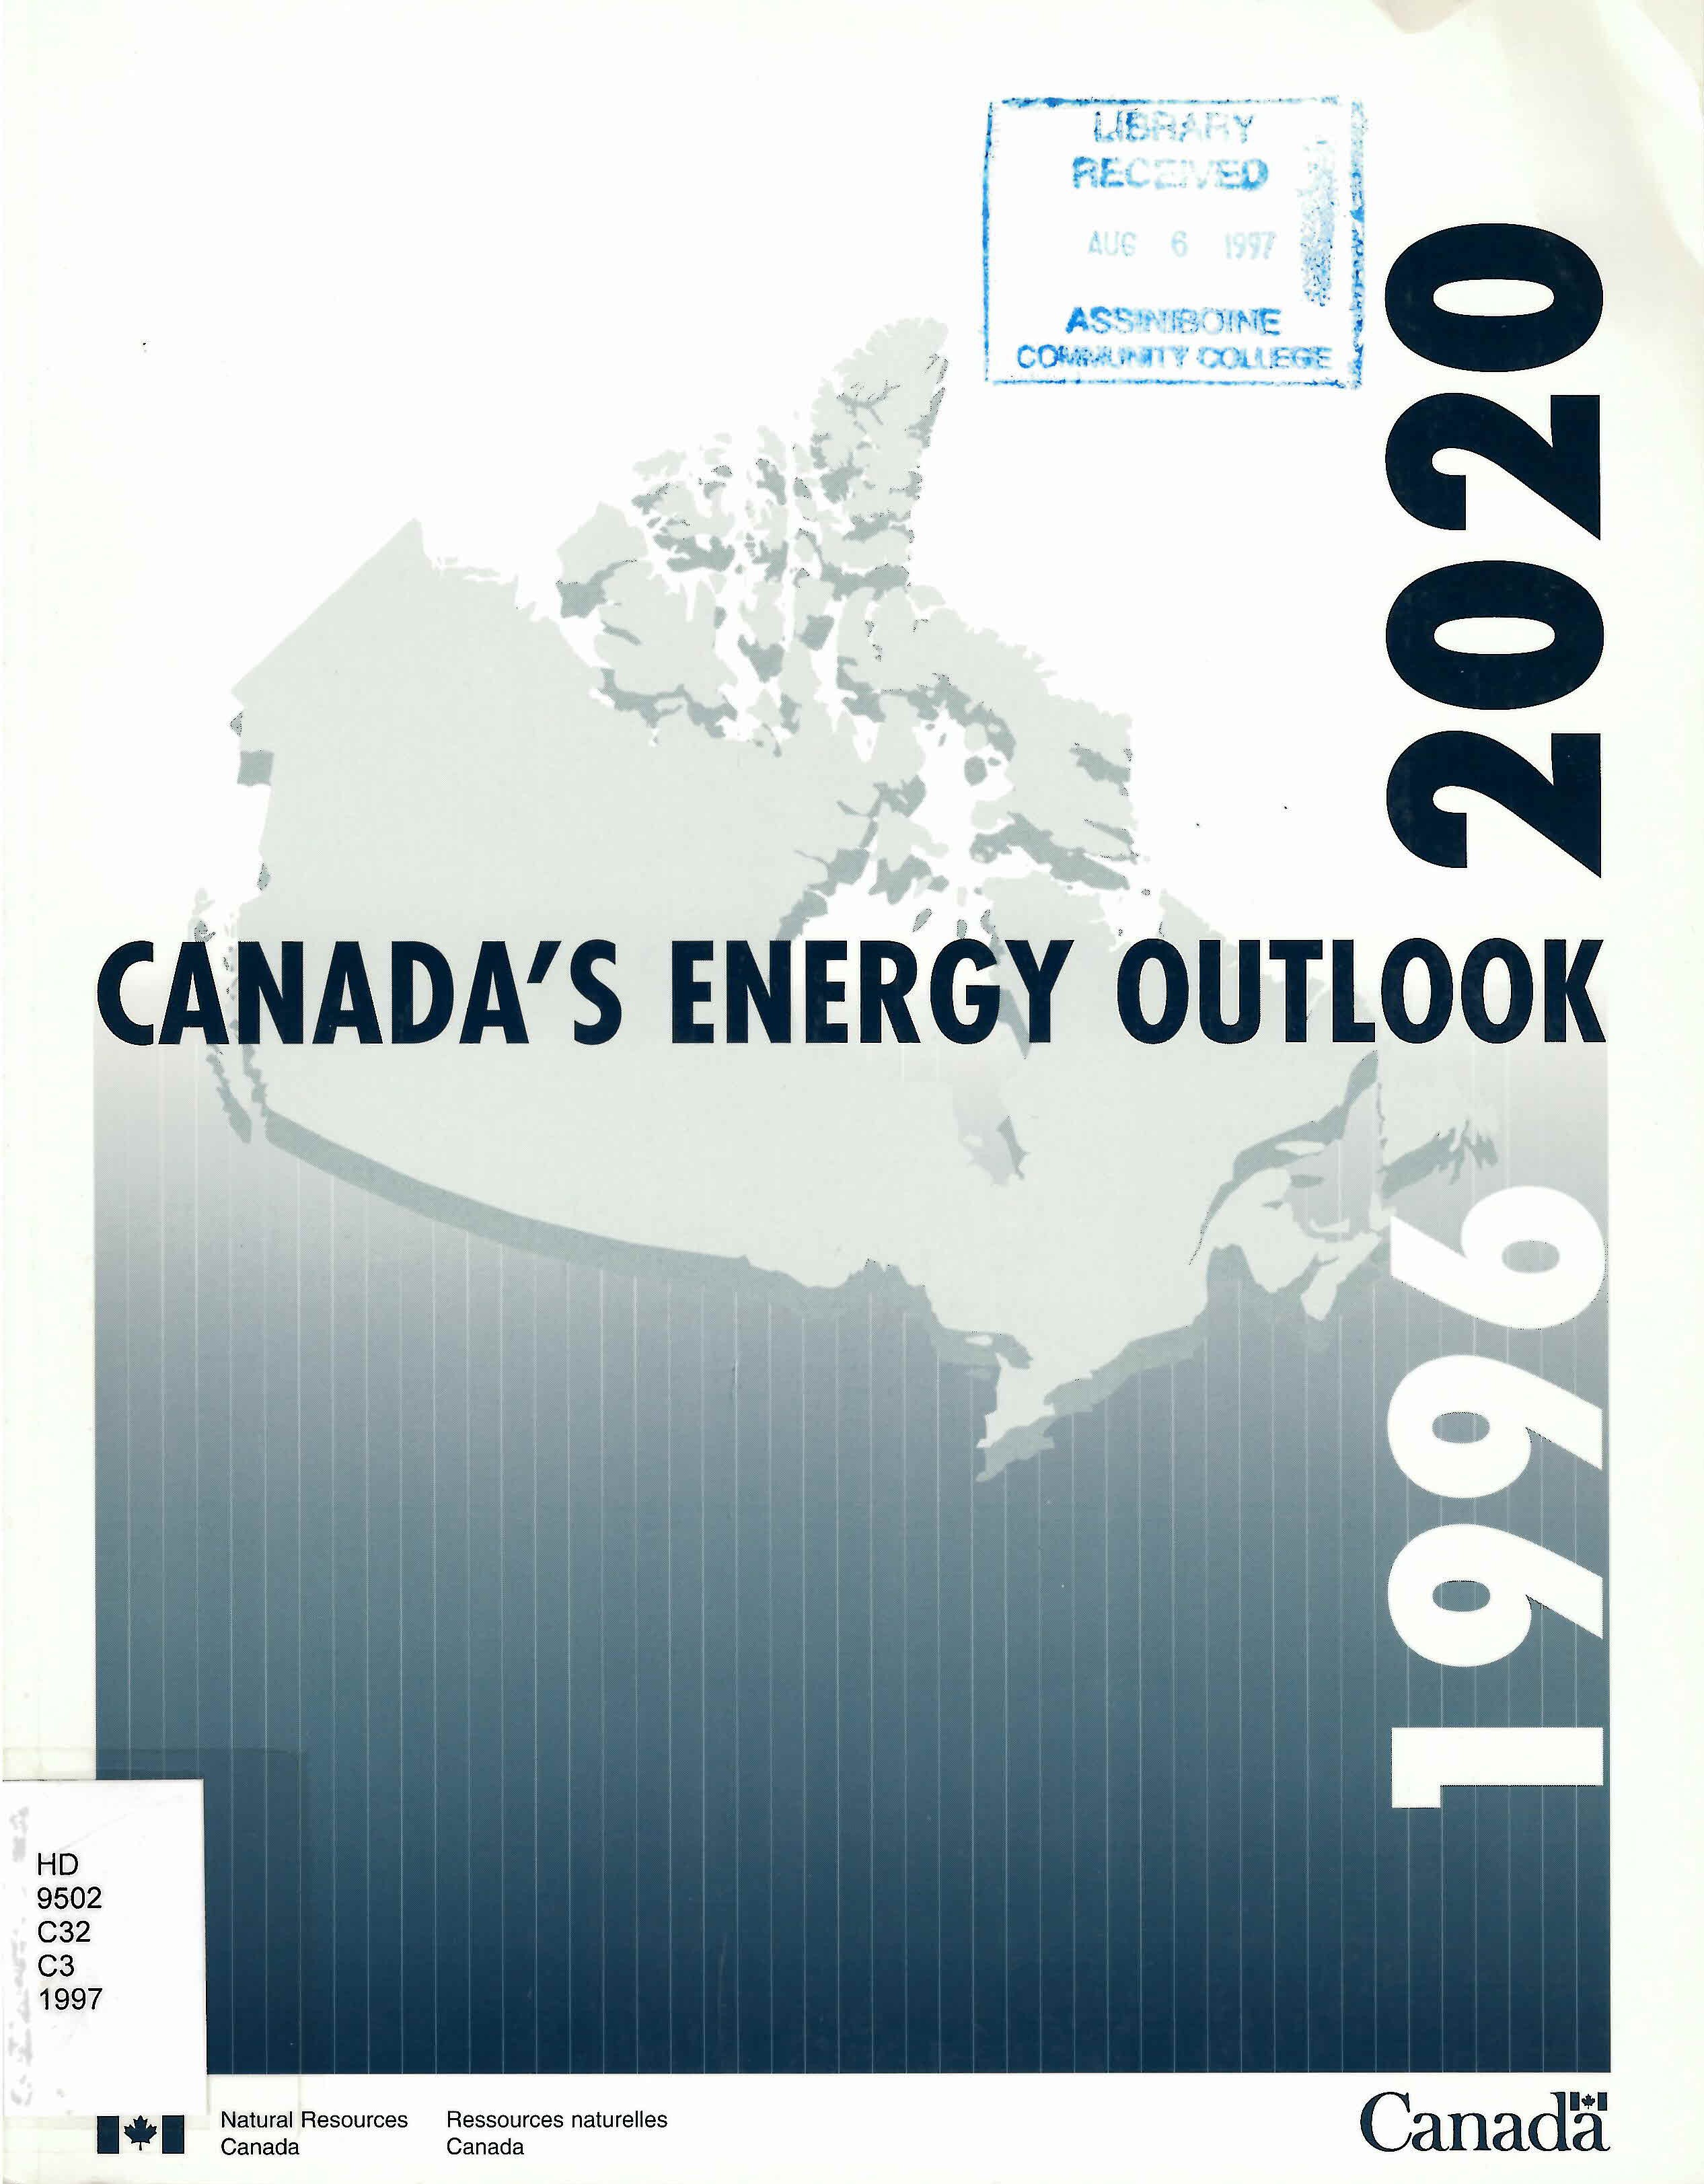 Canada's energy outlook, 1996-2020